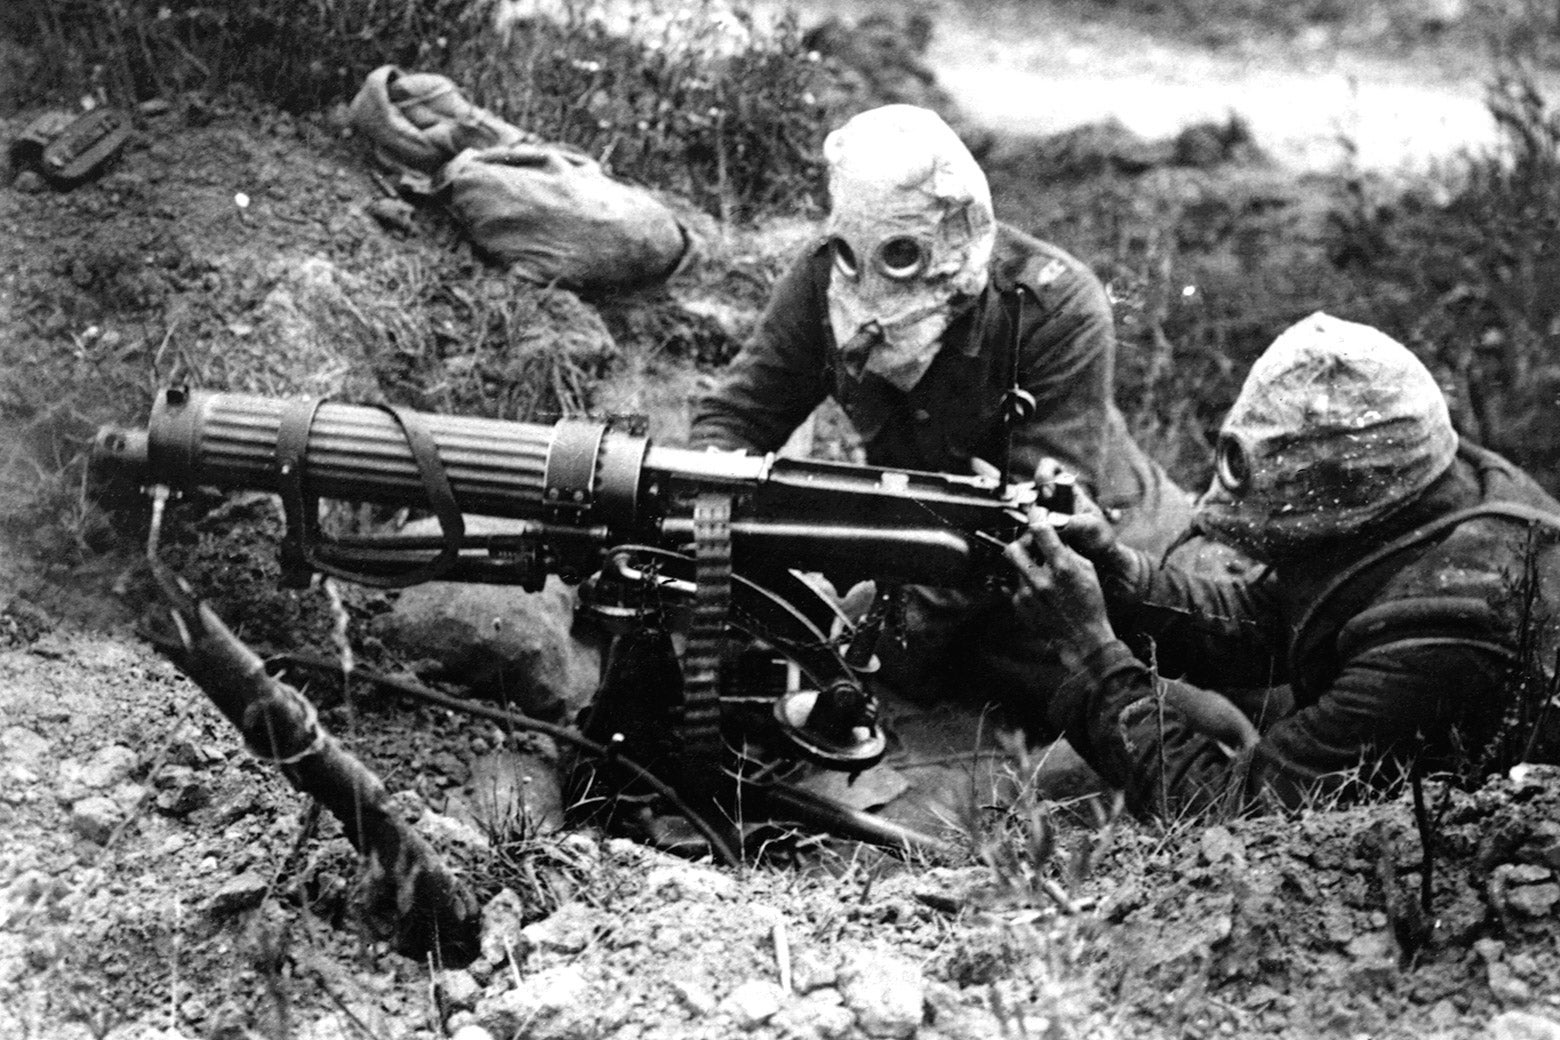 British machine gunners with gas masks on.